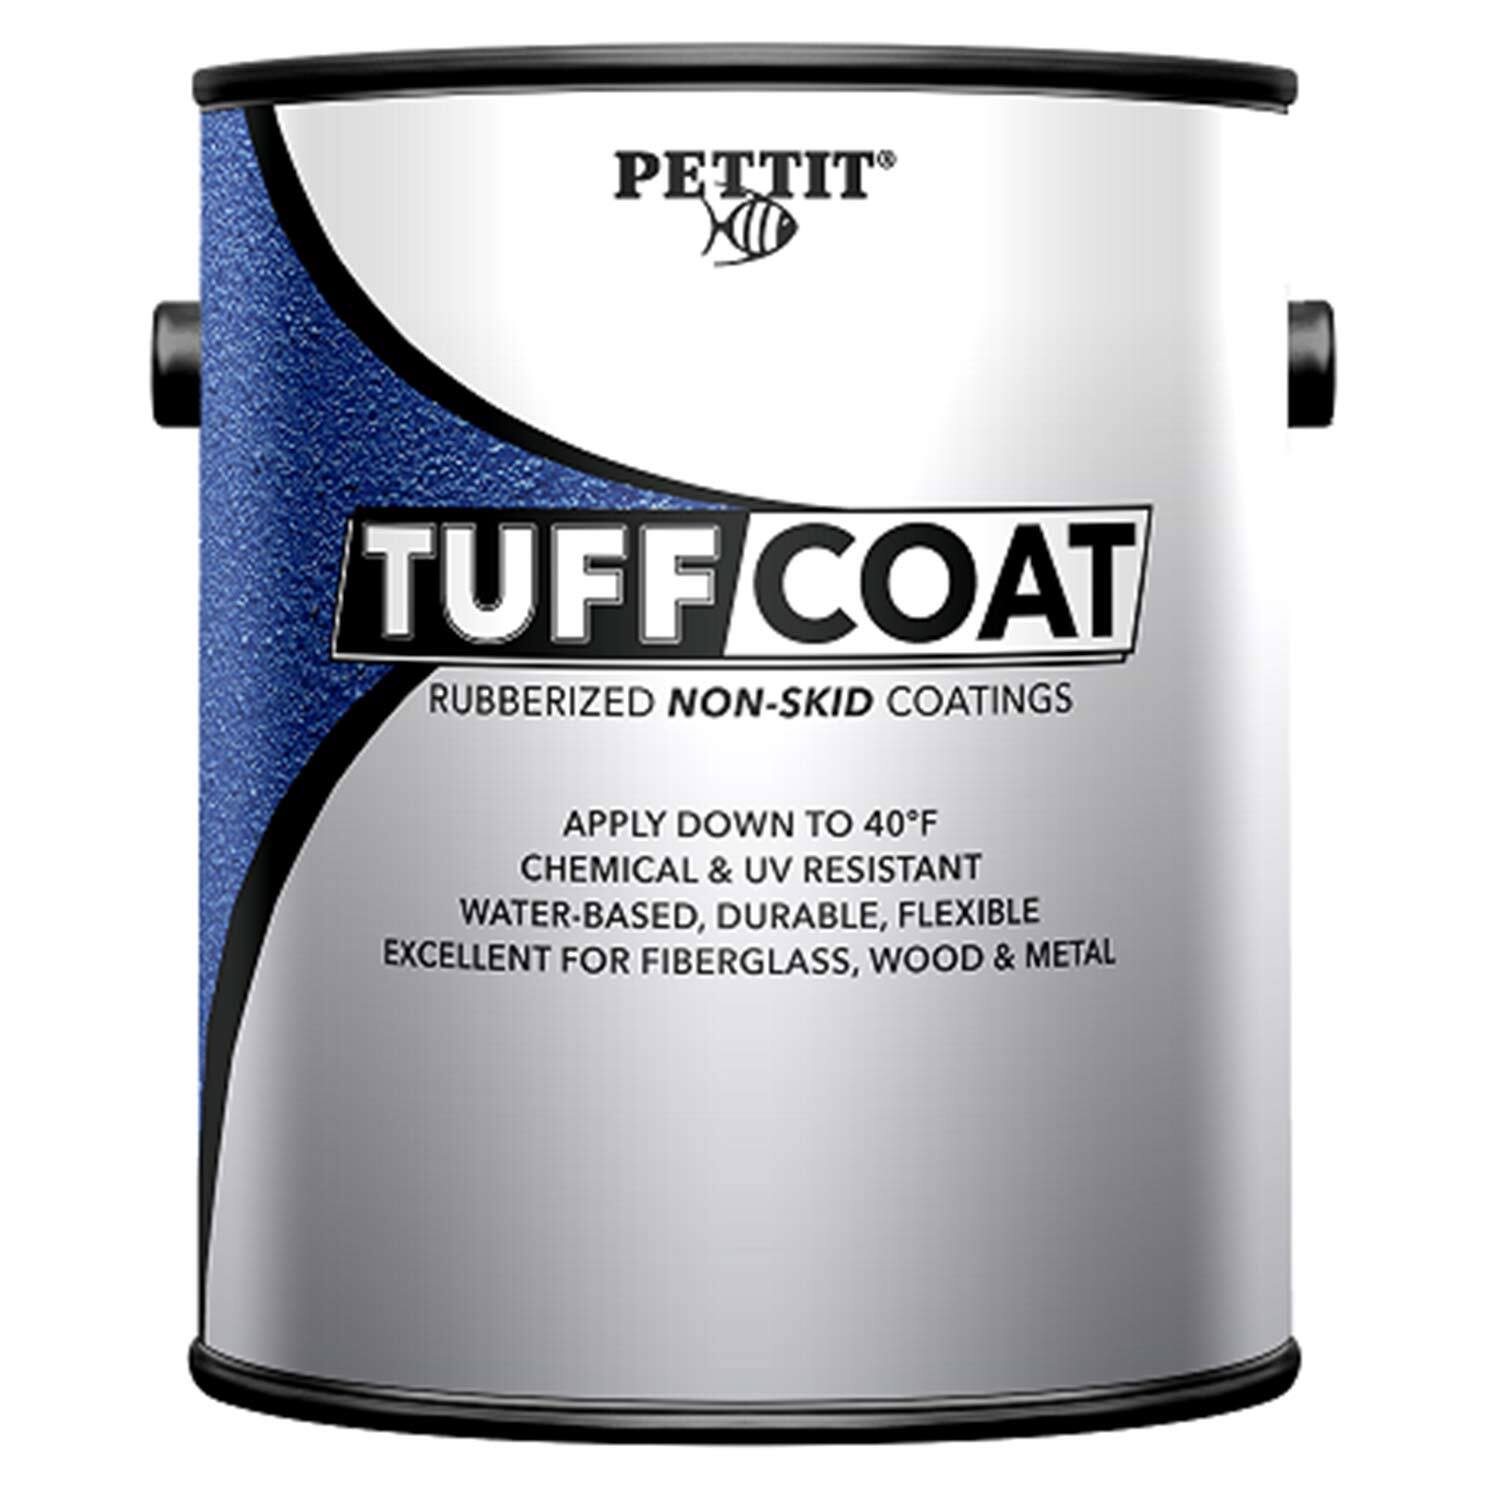 Pettit  Pettit Tuff Coat™ Metal Primer